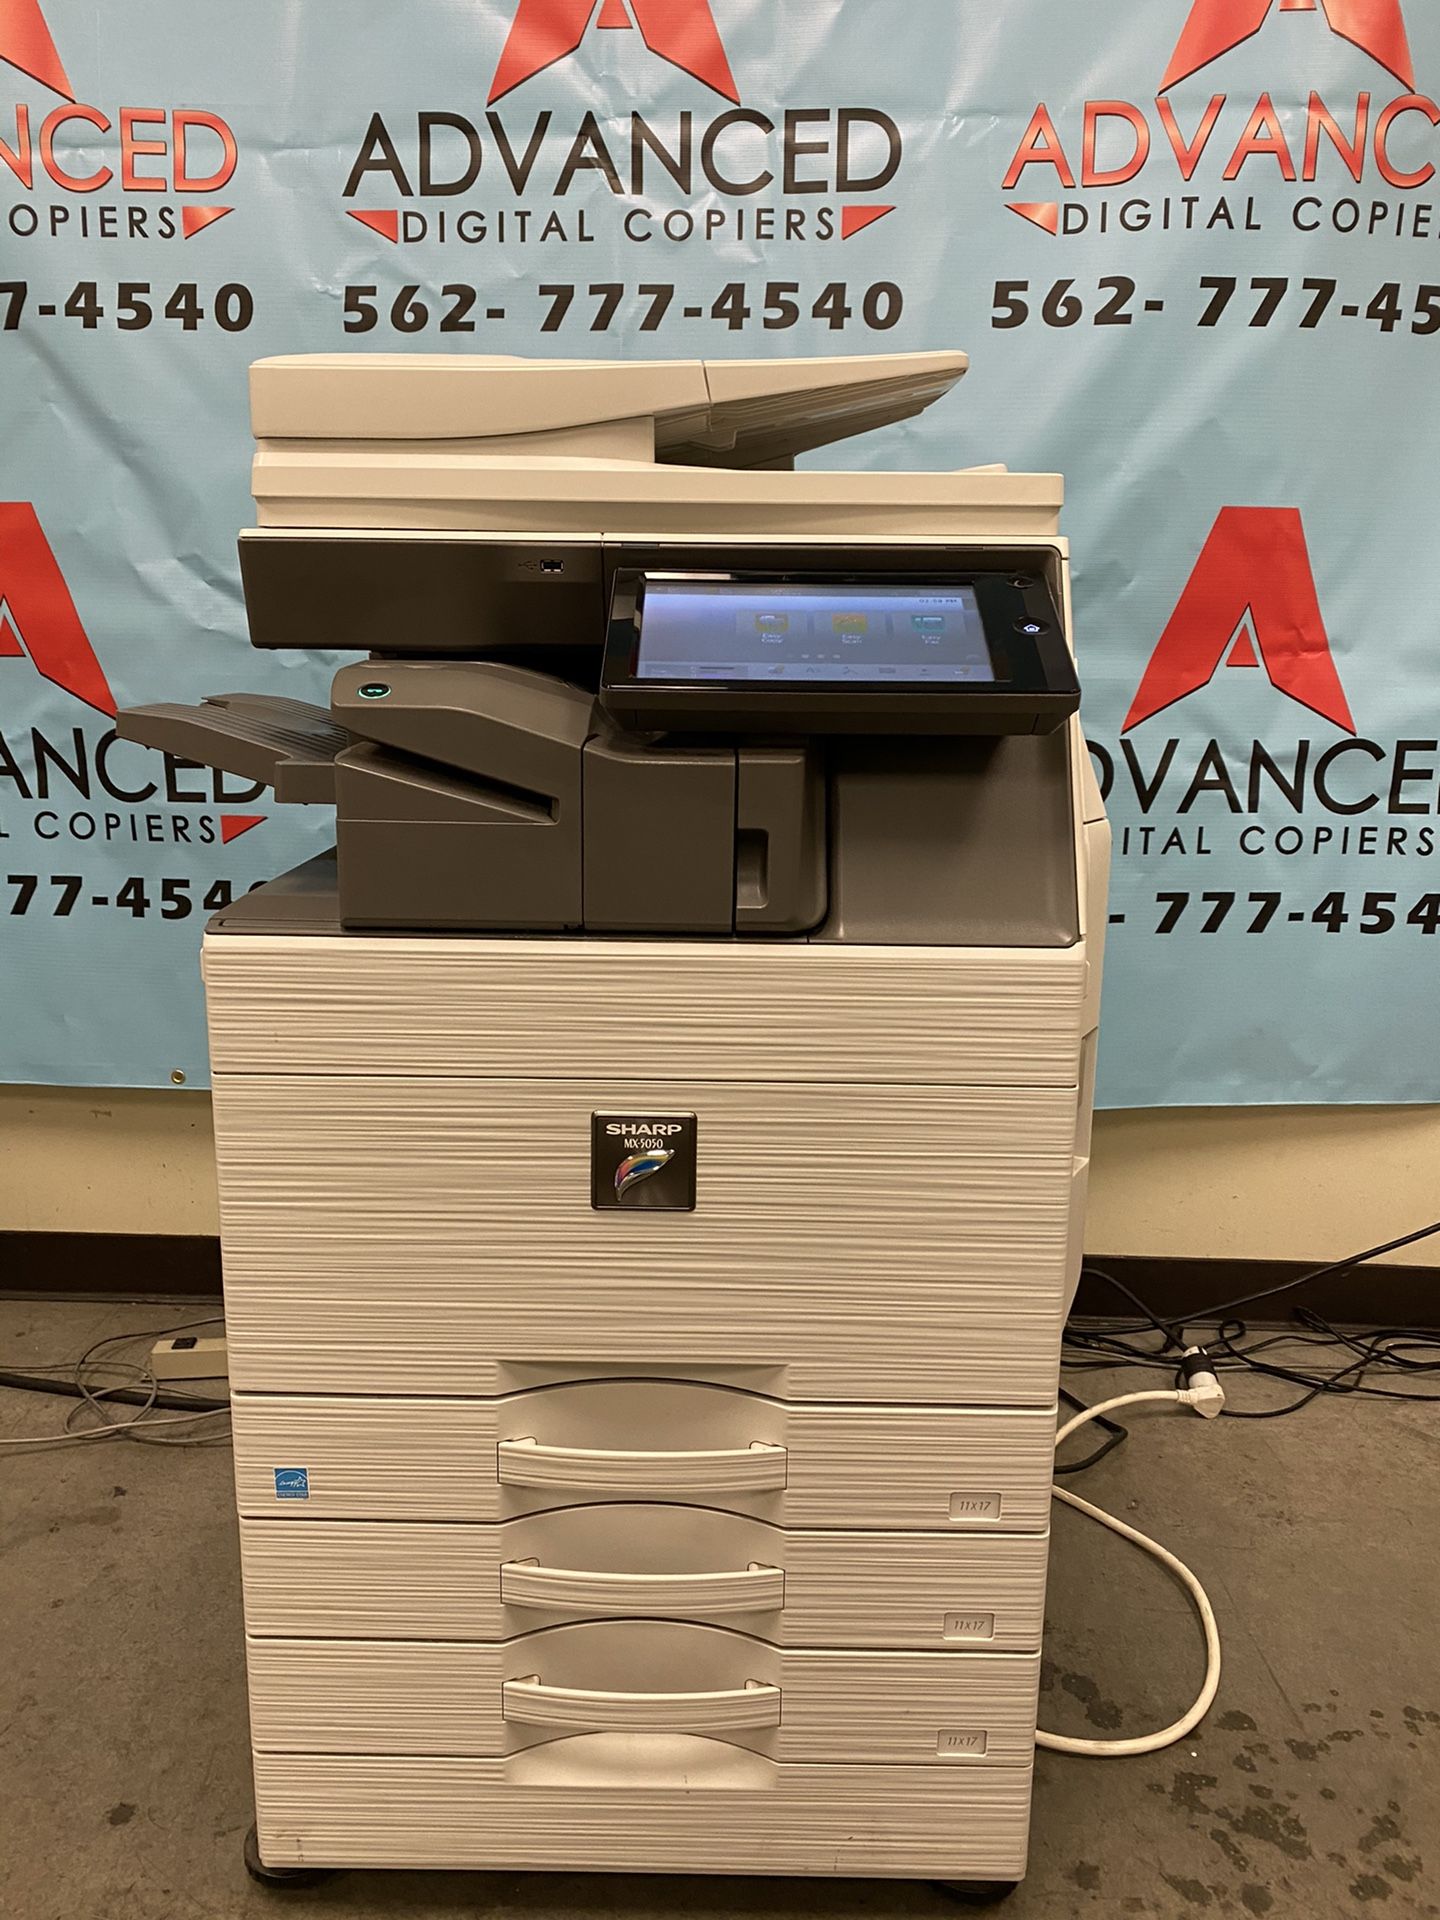 SHARP MX-5050 digital color copier printer scanner fax 3trays duplex staple finisher